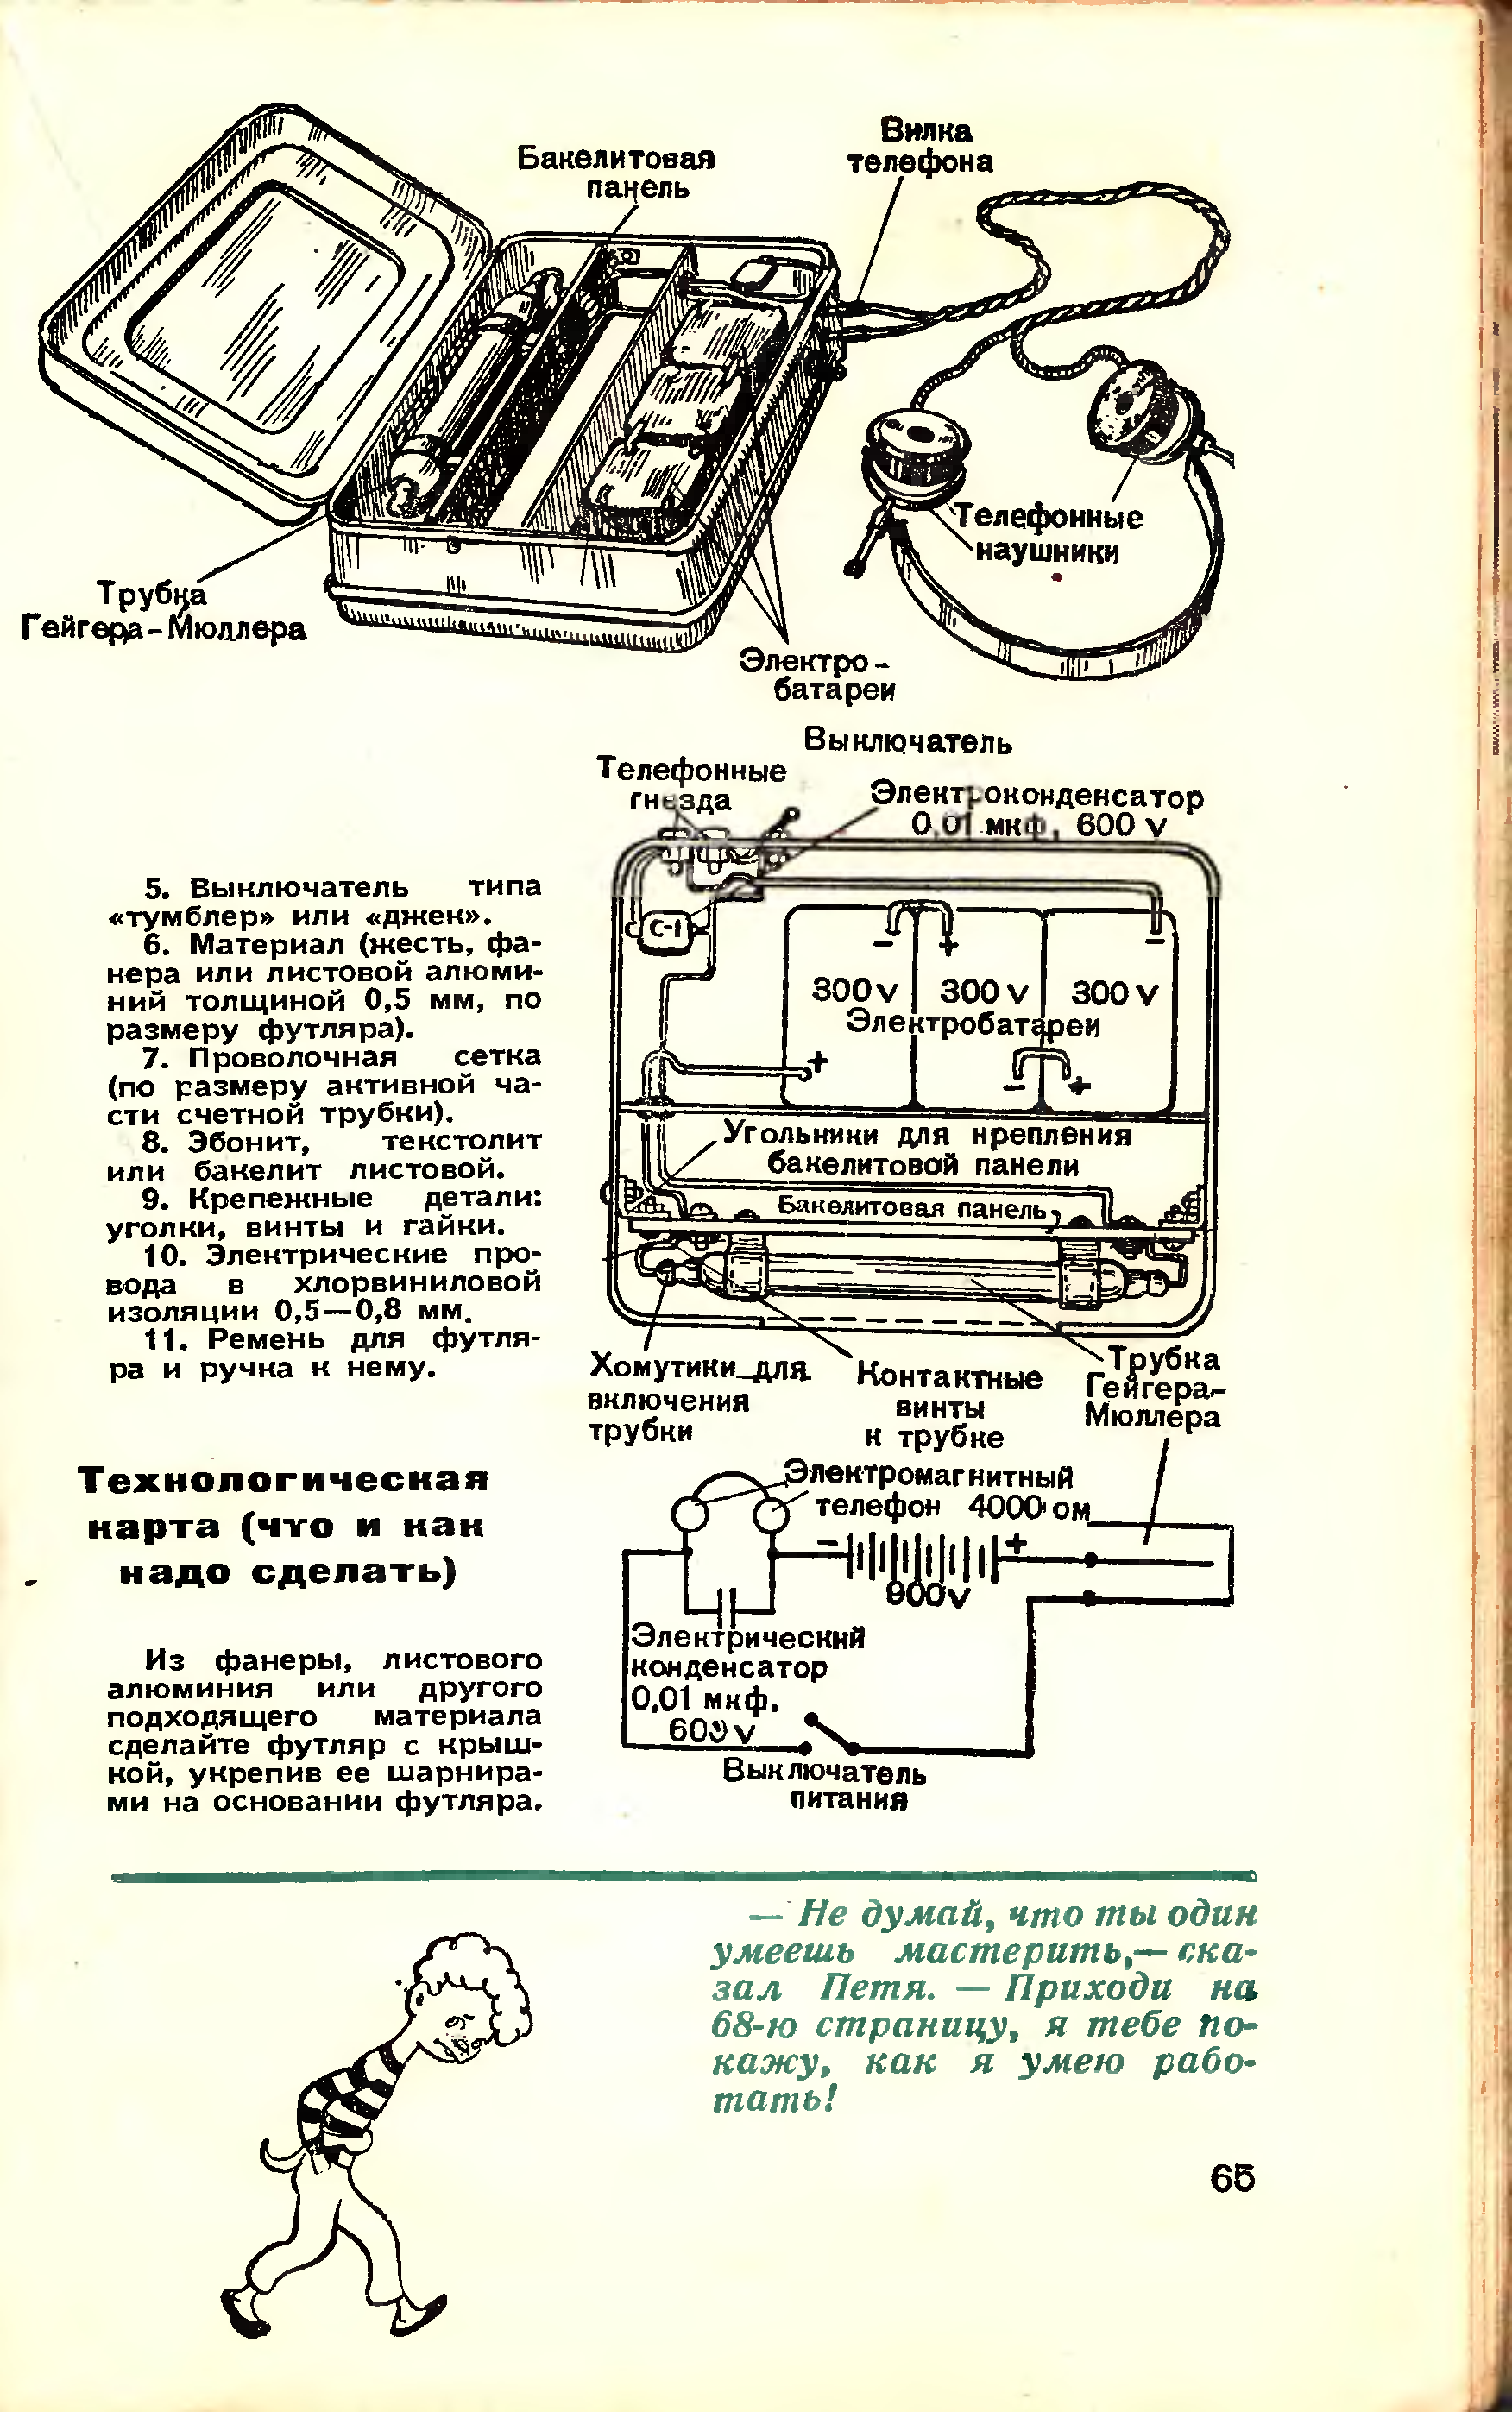 Homemade radiometer - Young Technician, the USSR, Magazine, Article, Homemade, Retro, 50th, Longpost